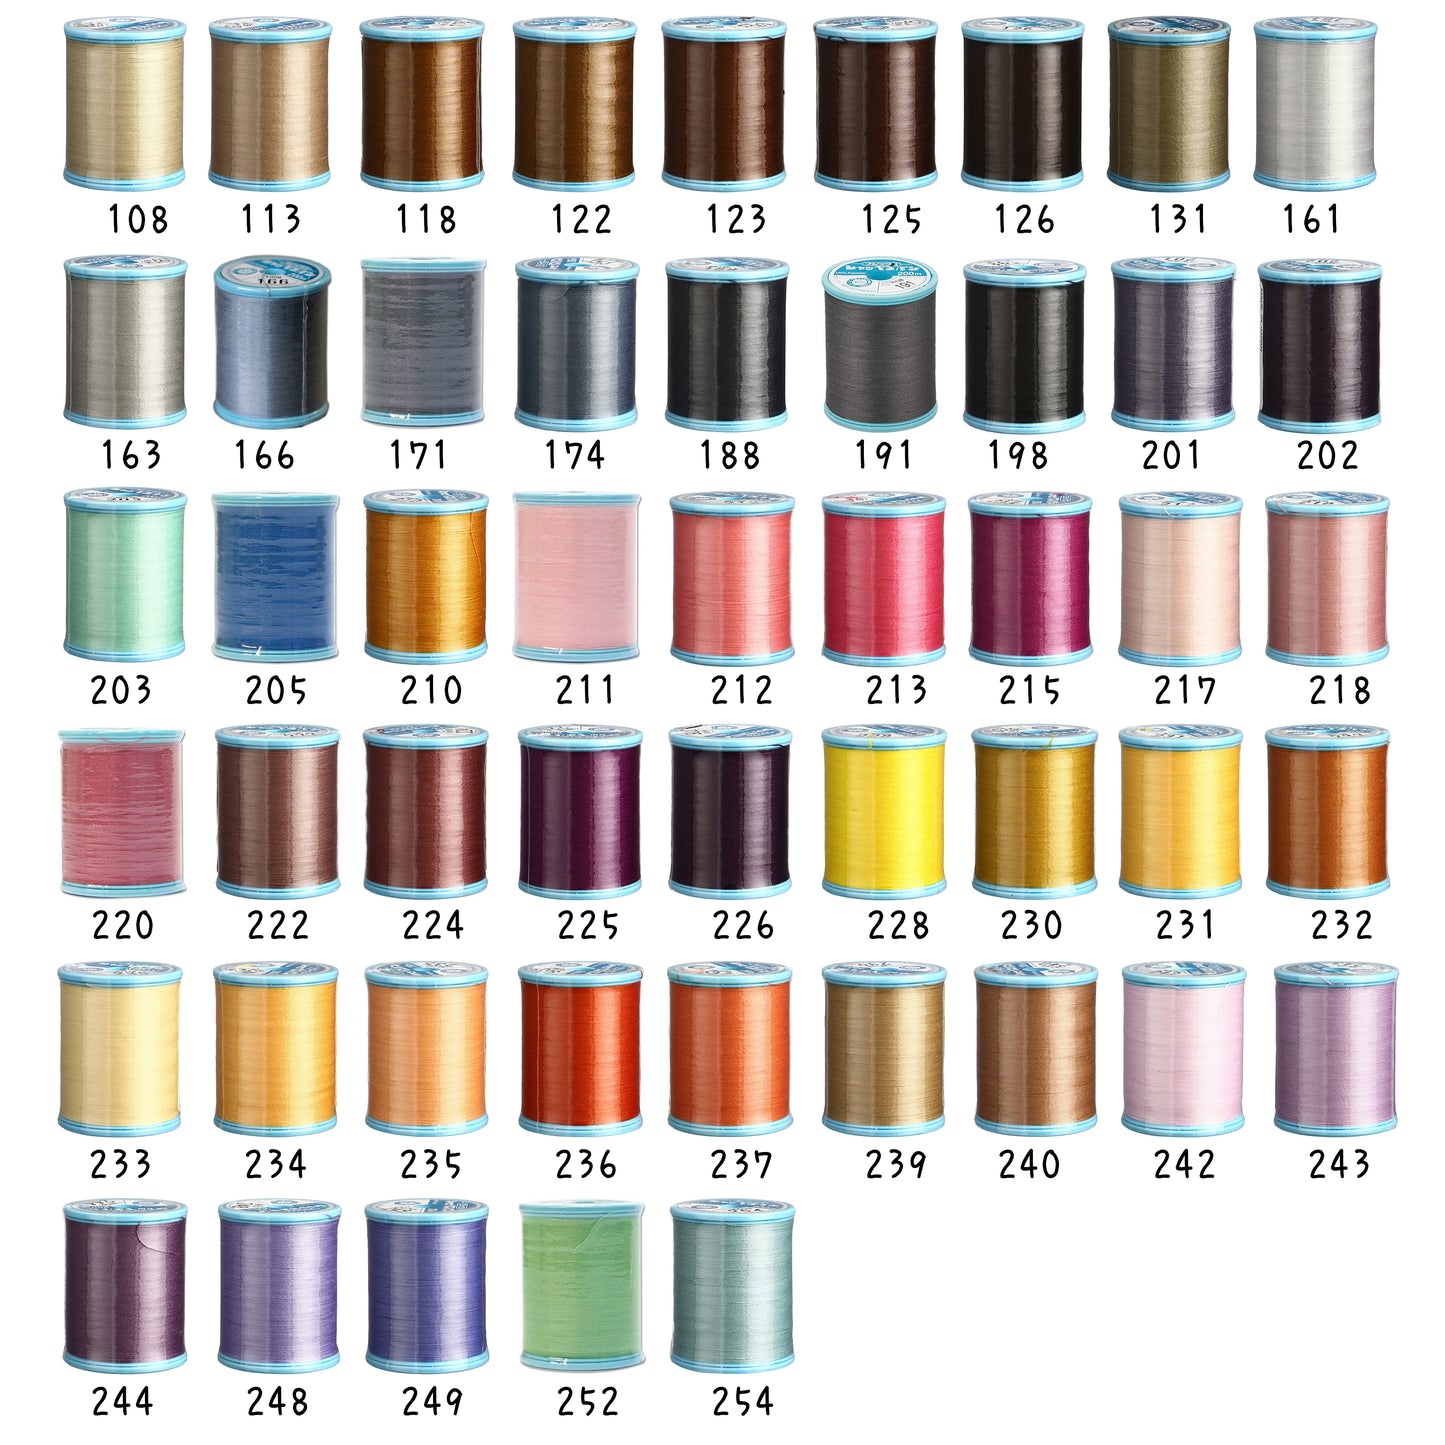 Fujix | #60 sewing thread 縫紉線(一般布使用) 200m - 150 colors (108-254)